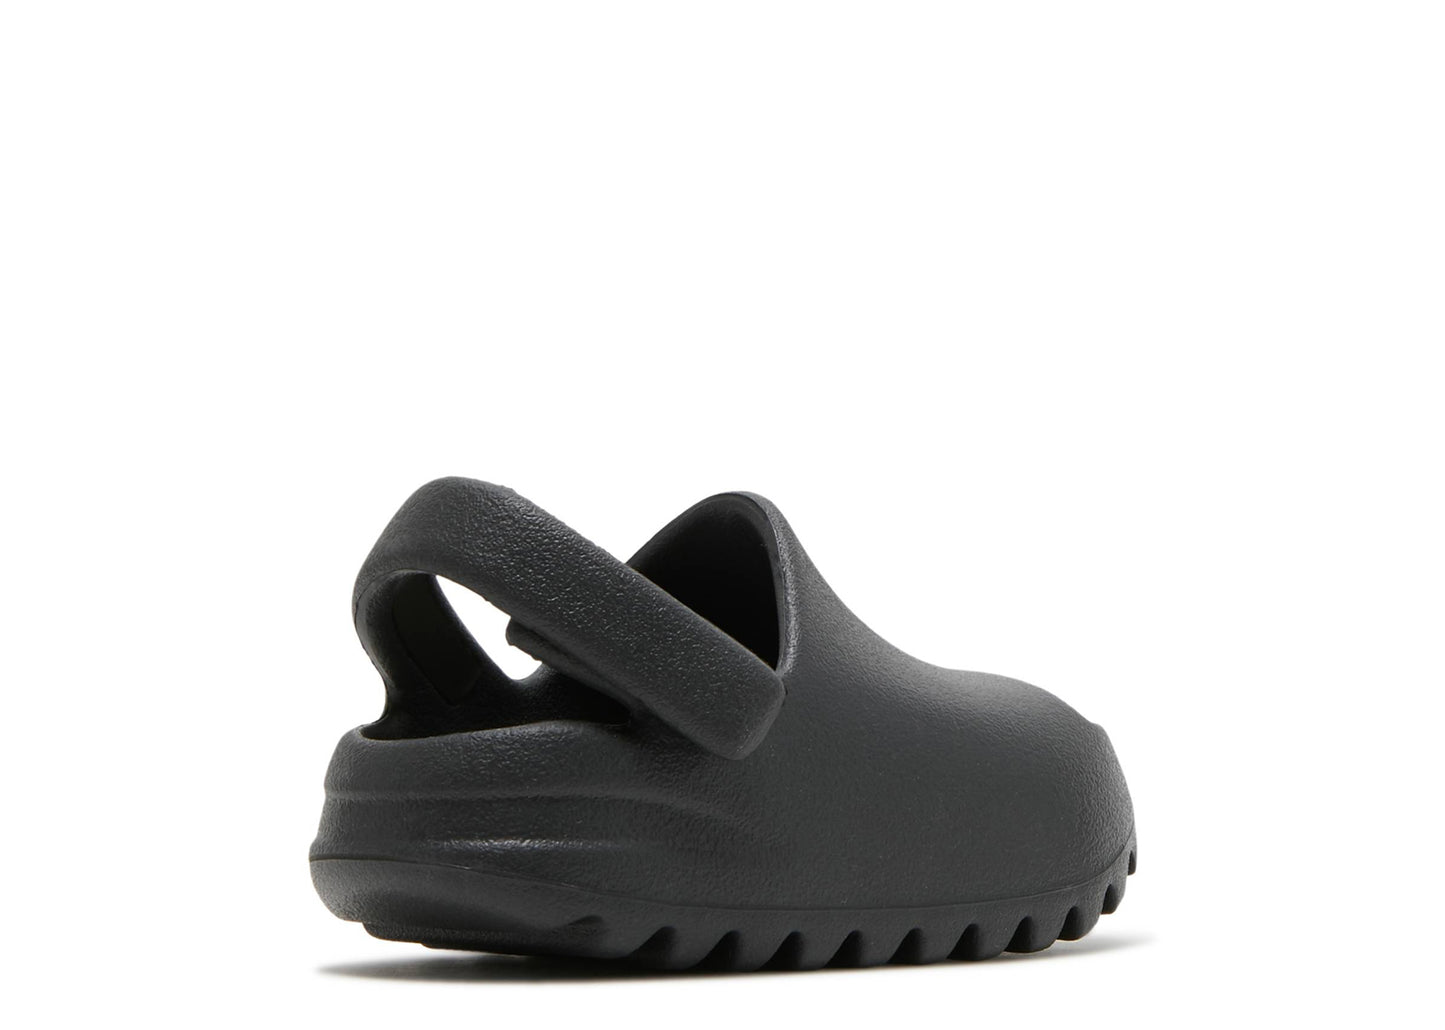 Adidas Yeezy Slide Infant "Onyx"